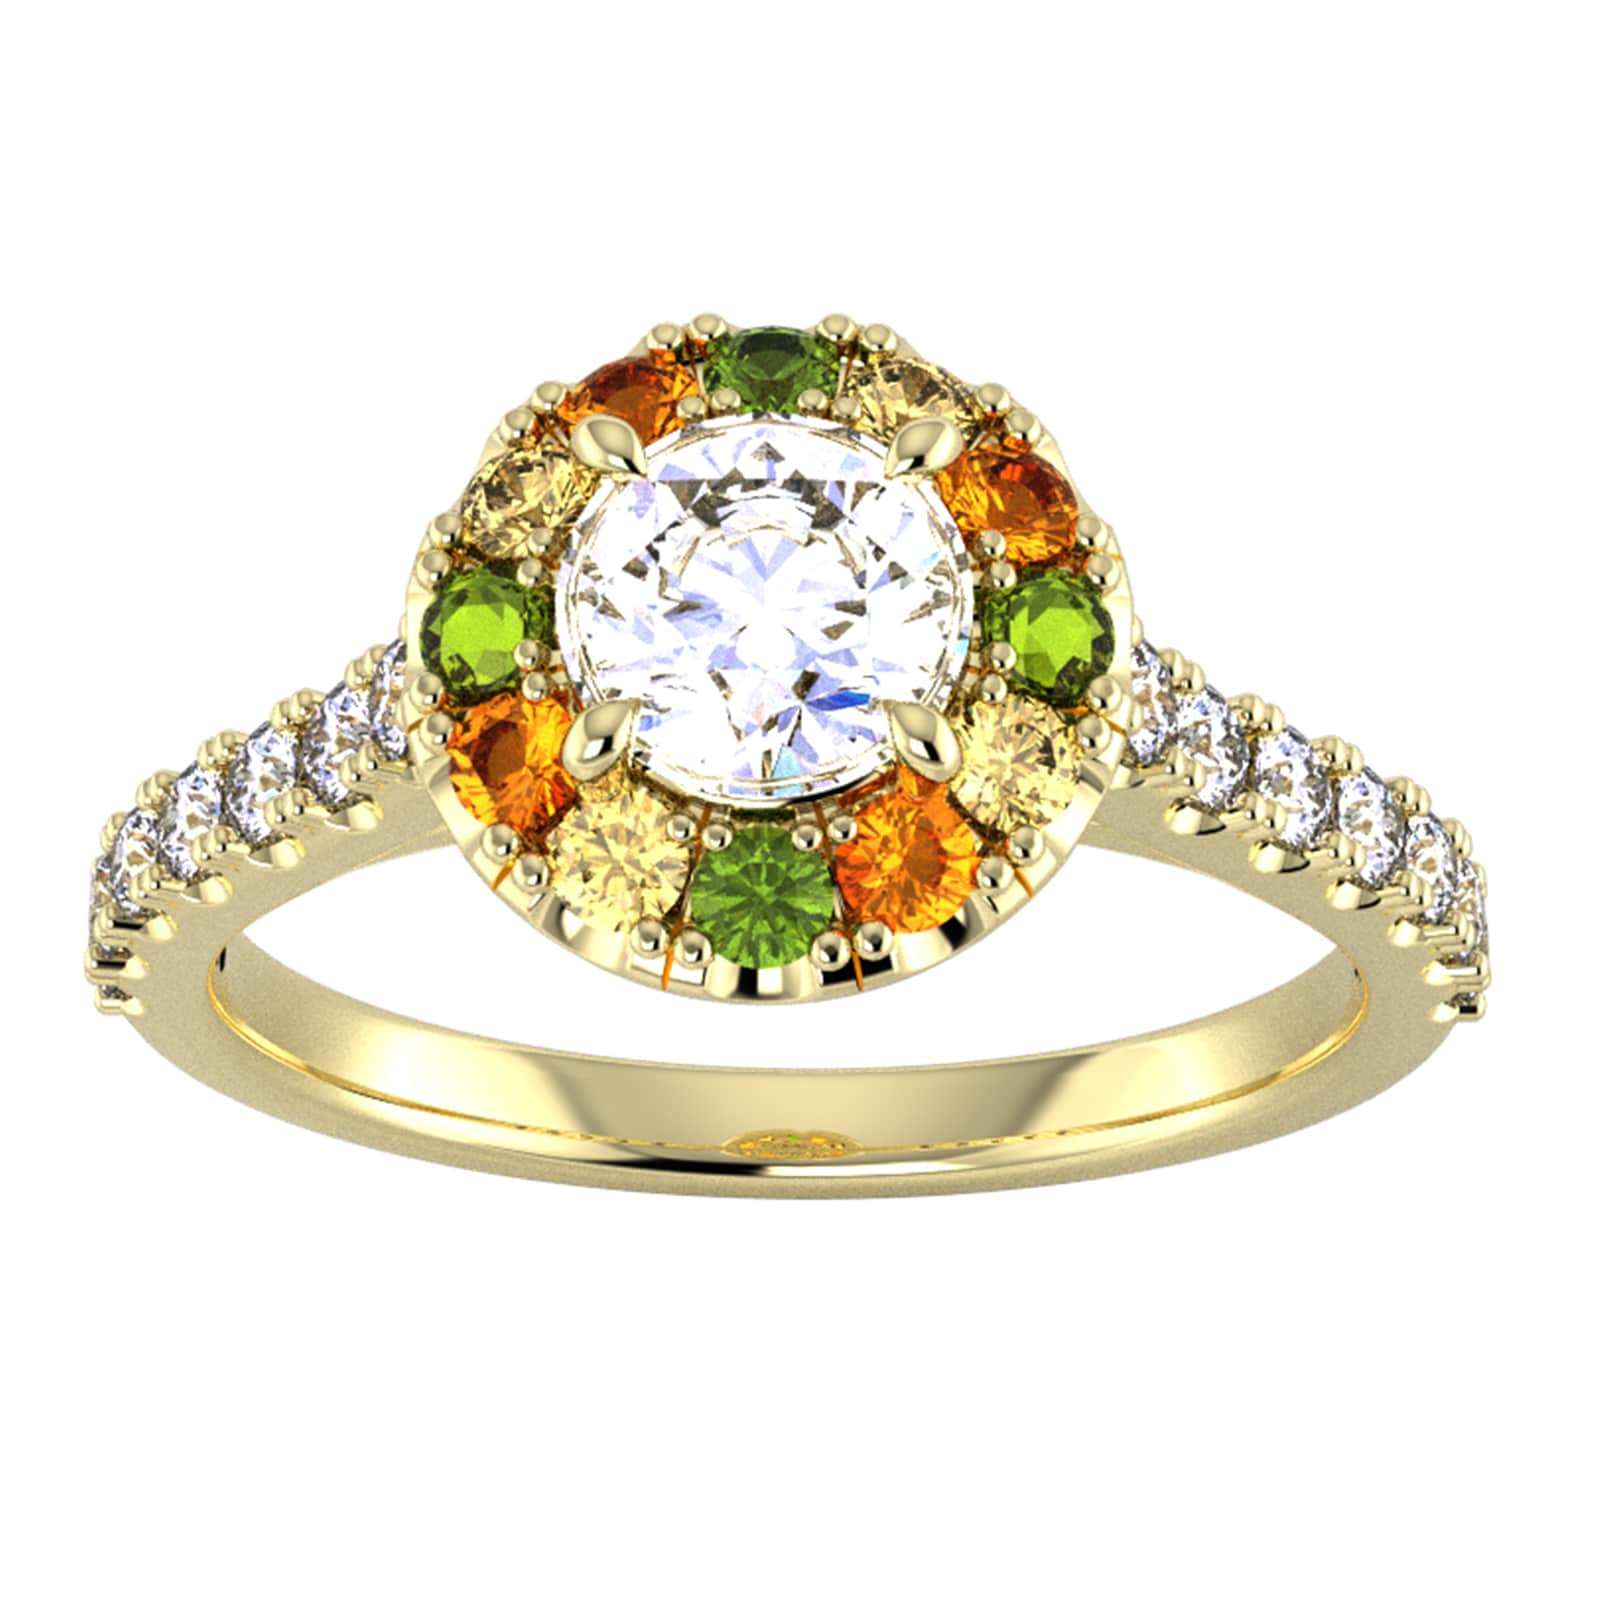 9ct Yellow Gold Diamond & Yellow, Orange, Green Sapphire Halo Ring - Ring Size N.5